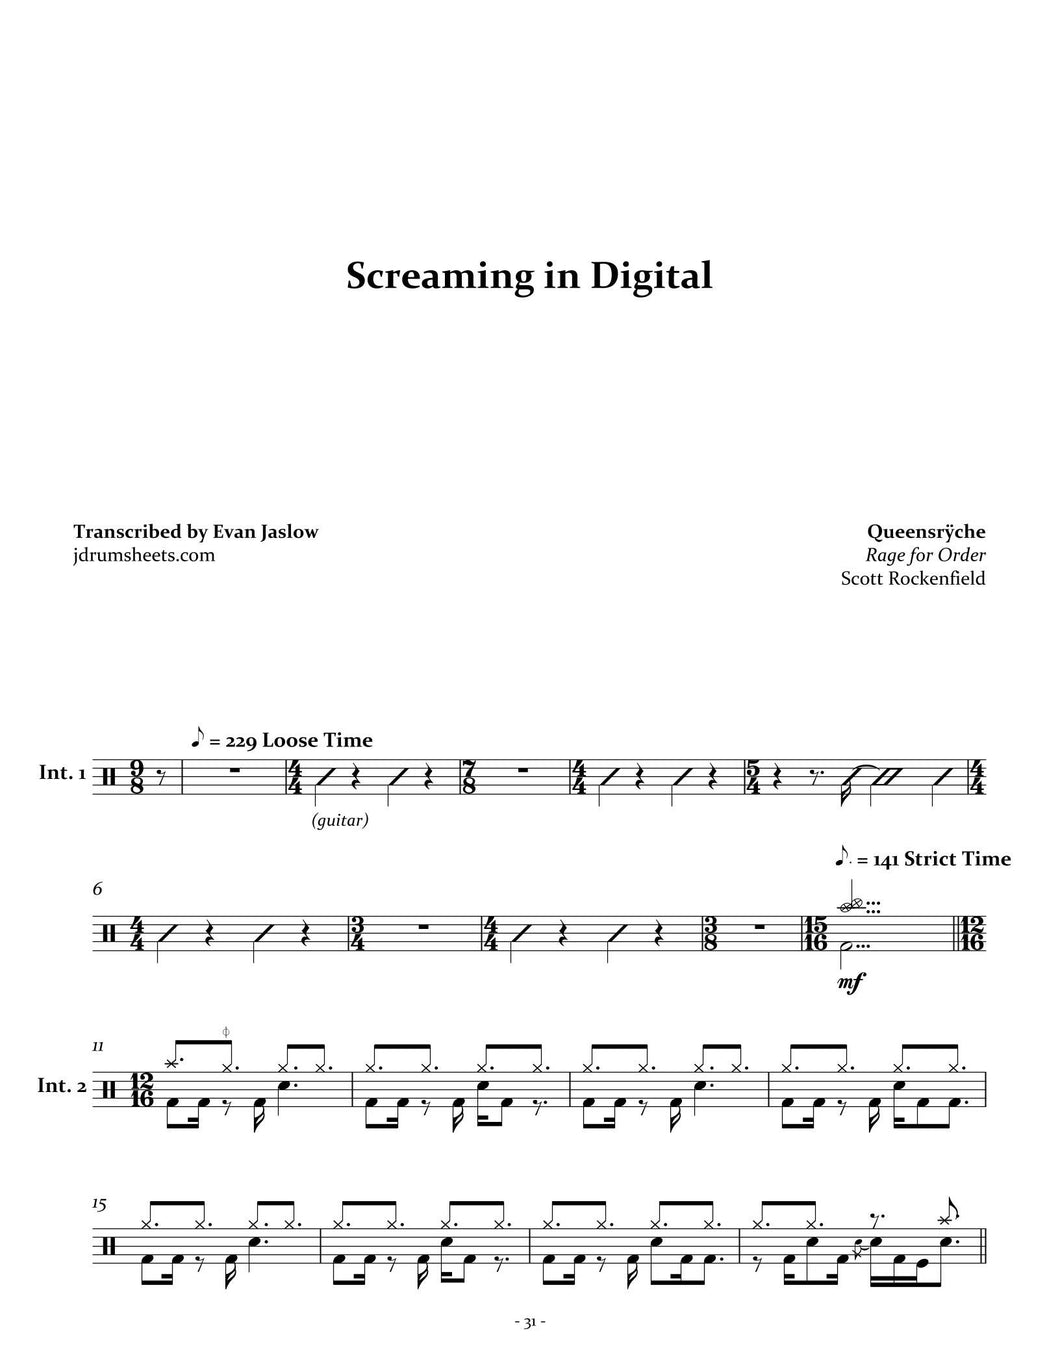 Screaming in Digital - Queensrÿche - Full Drum Transcription / Drum Sheet Music - Jaslow Drum Sheets